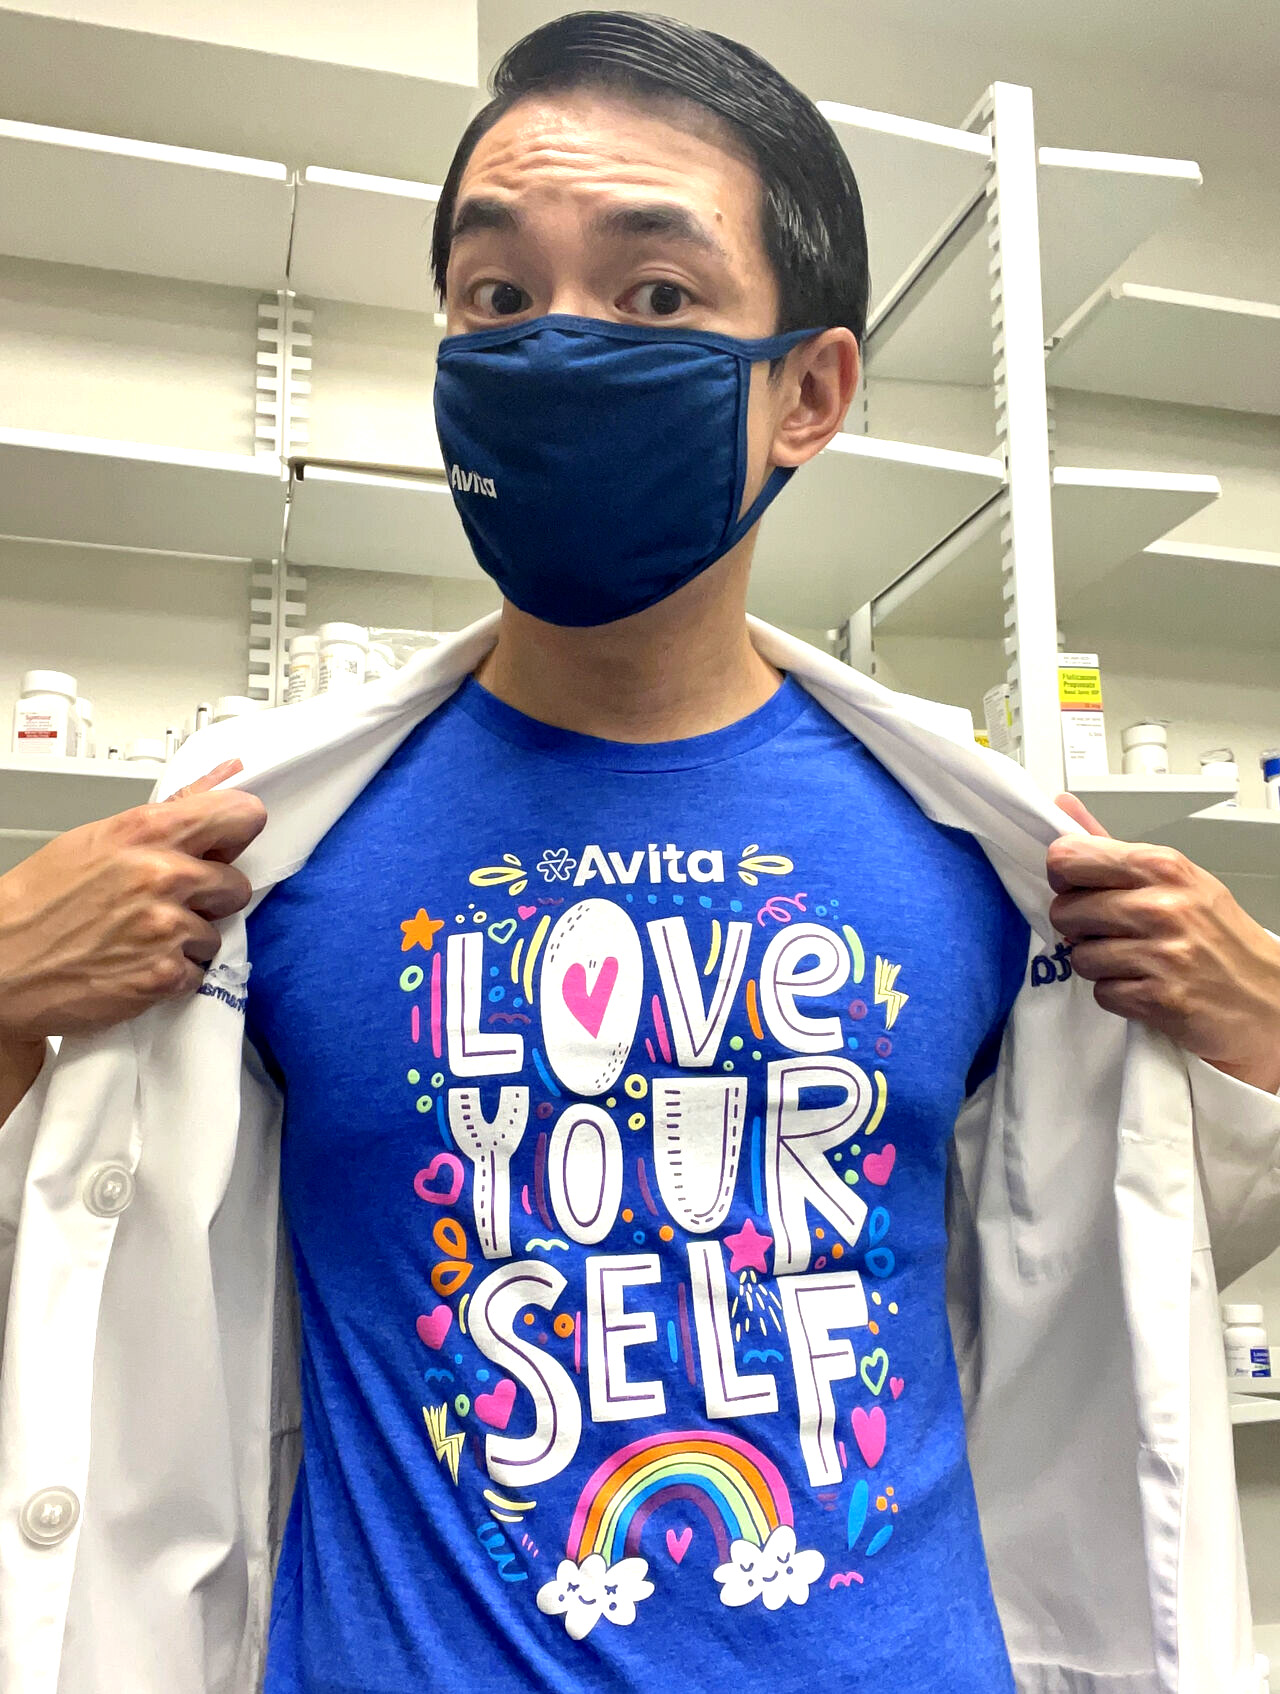 Pharmacist with Avita "Love Your Self" tshirt